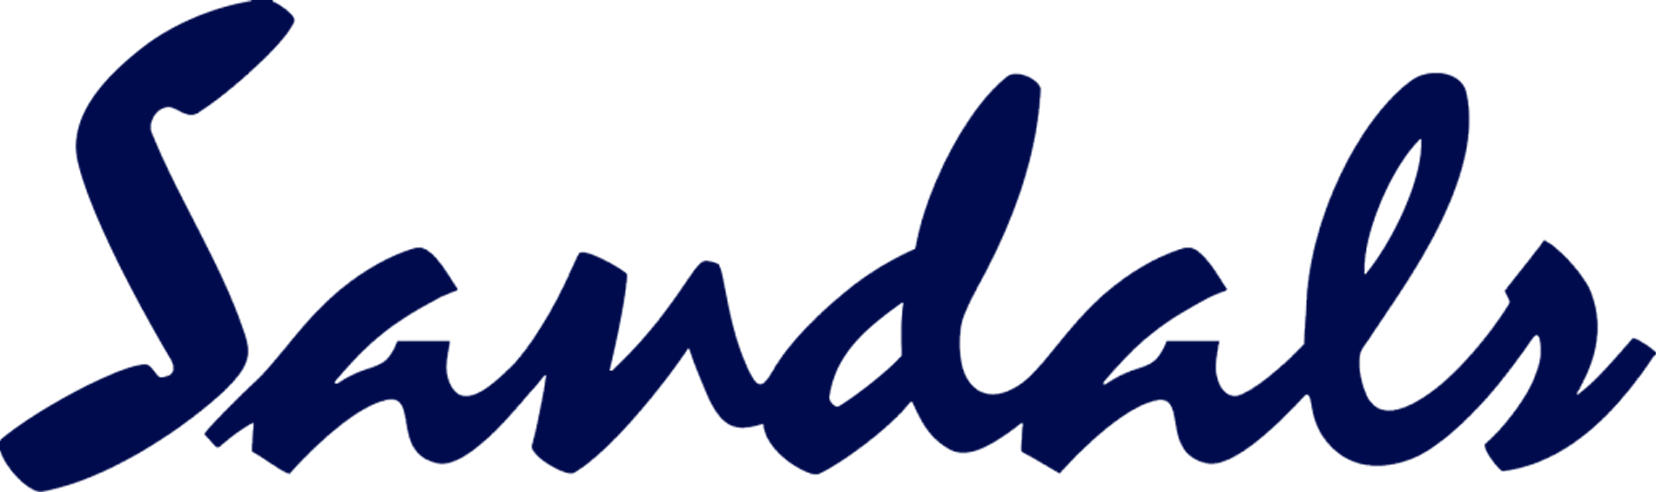 Sandals Resorts logo